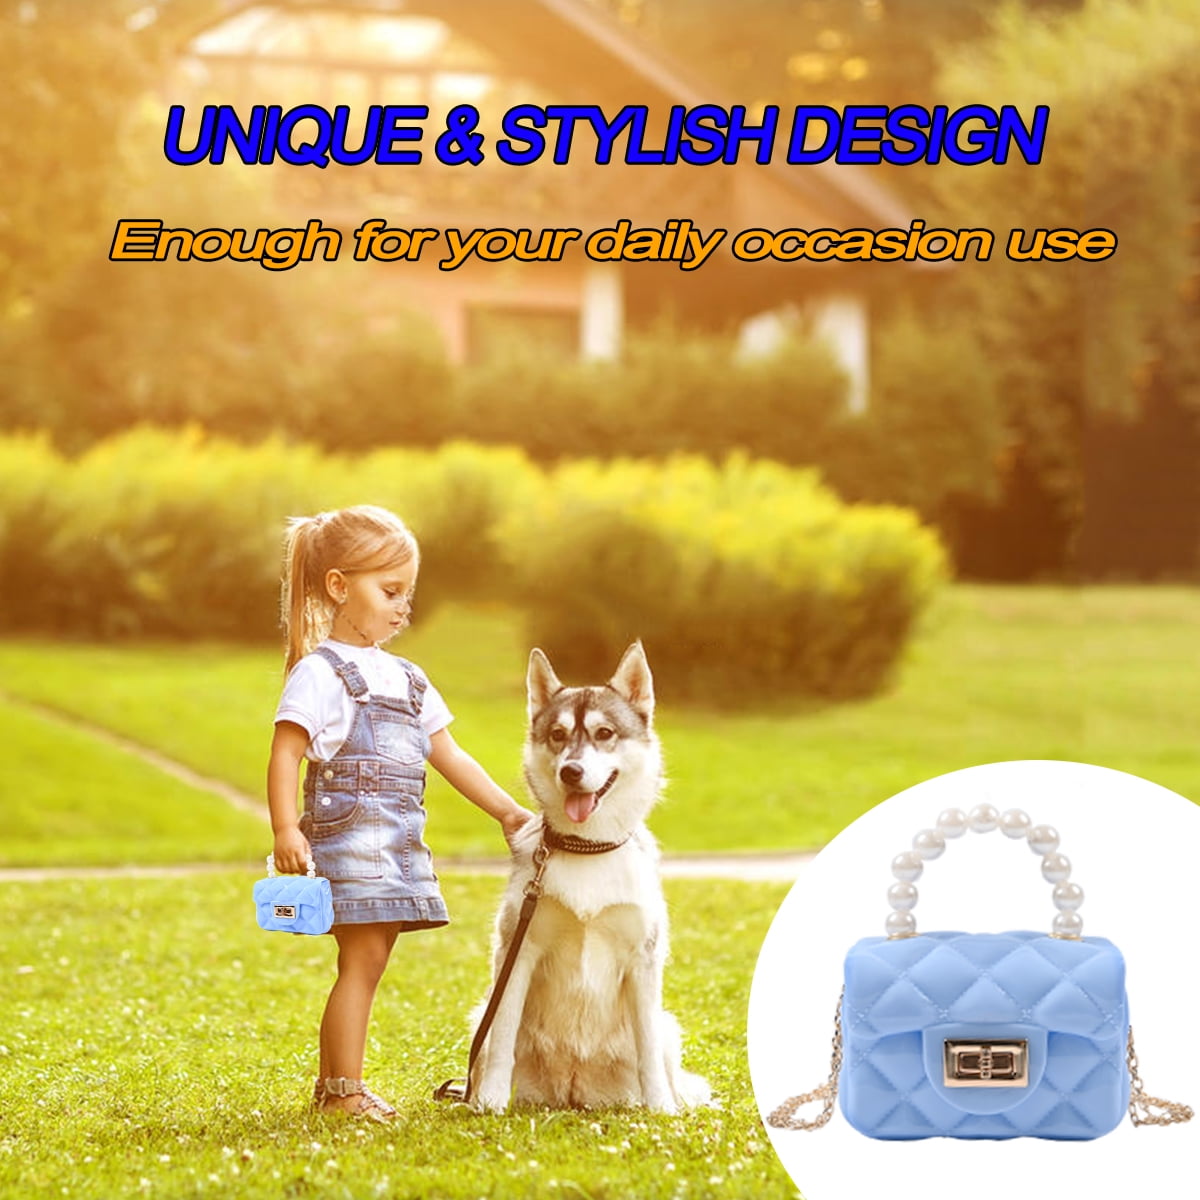 Mini Purse sling bag for Girls Kids Jelly Purse Clutch Crossbody